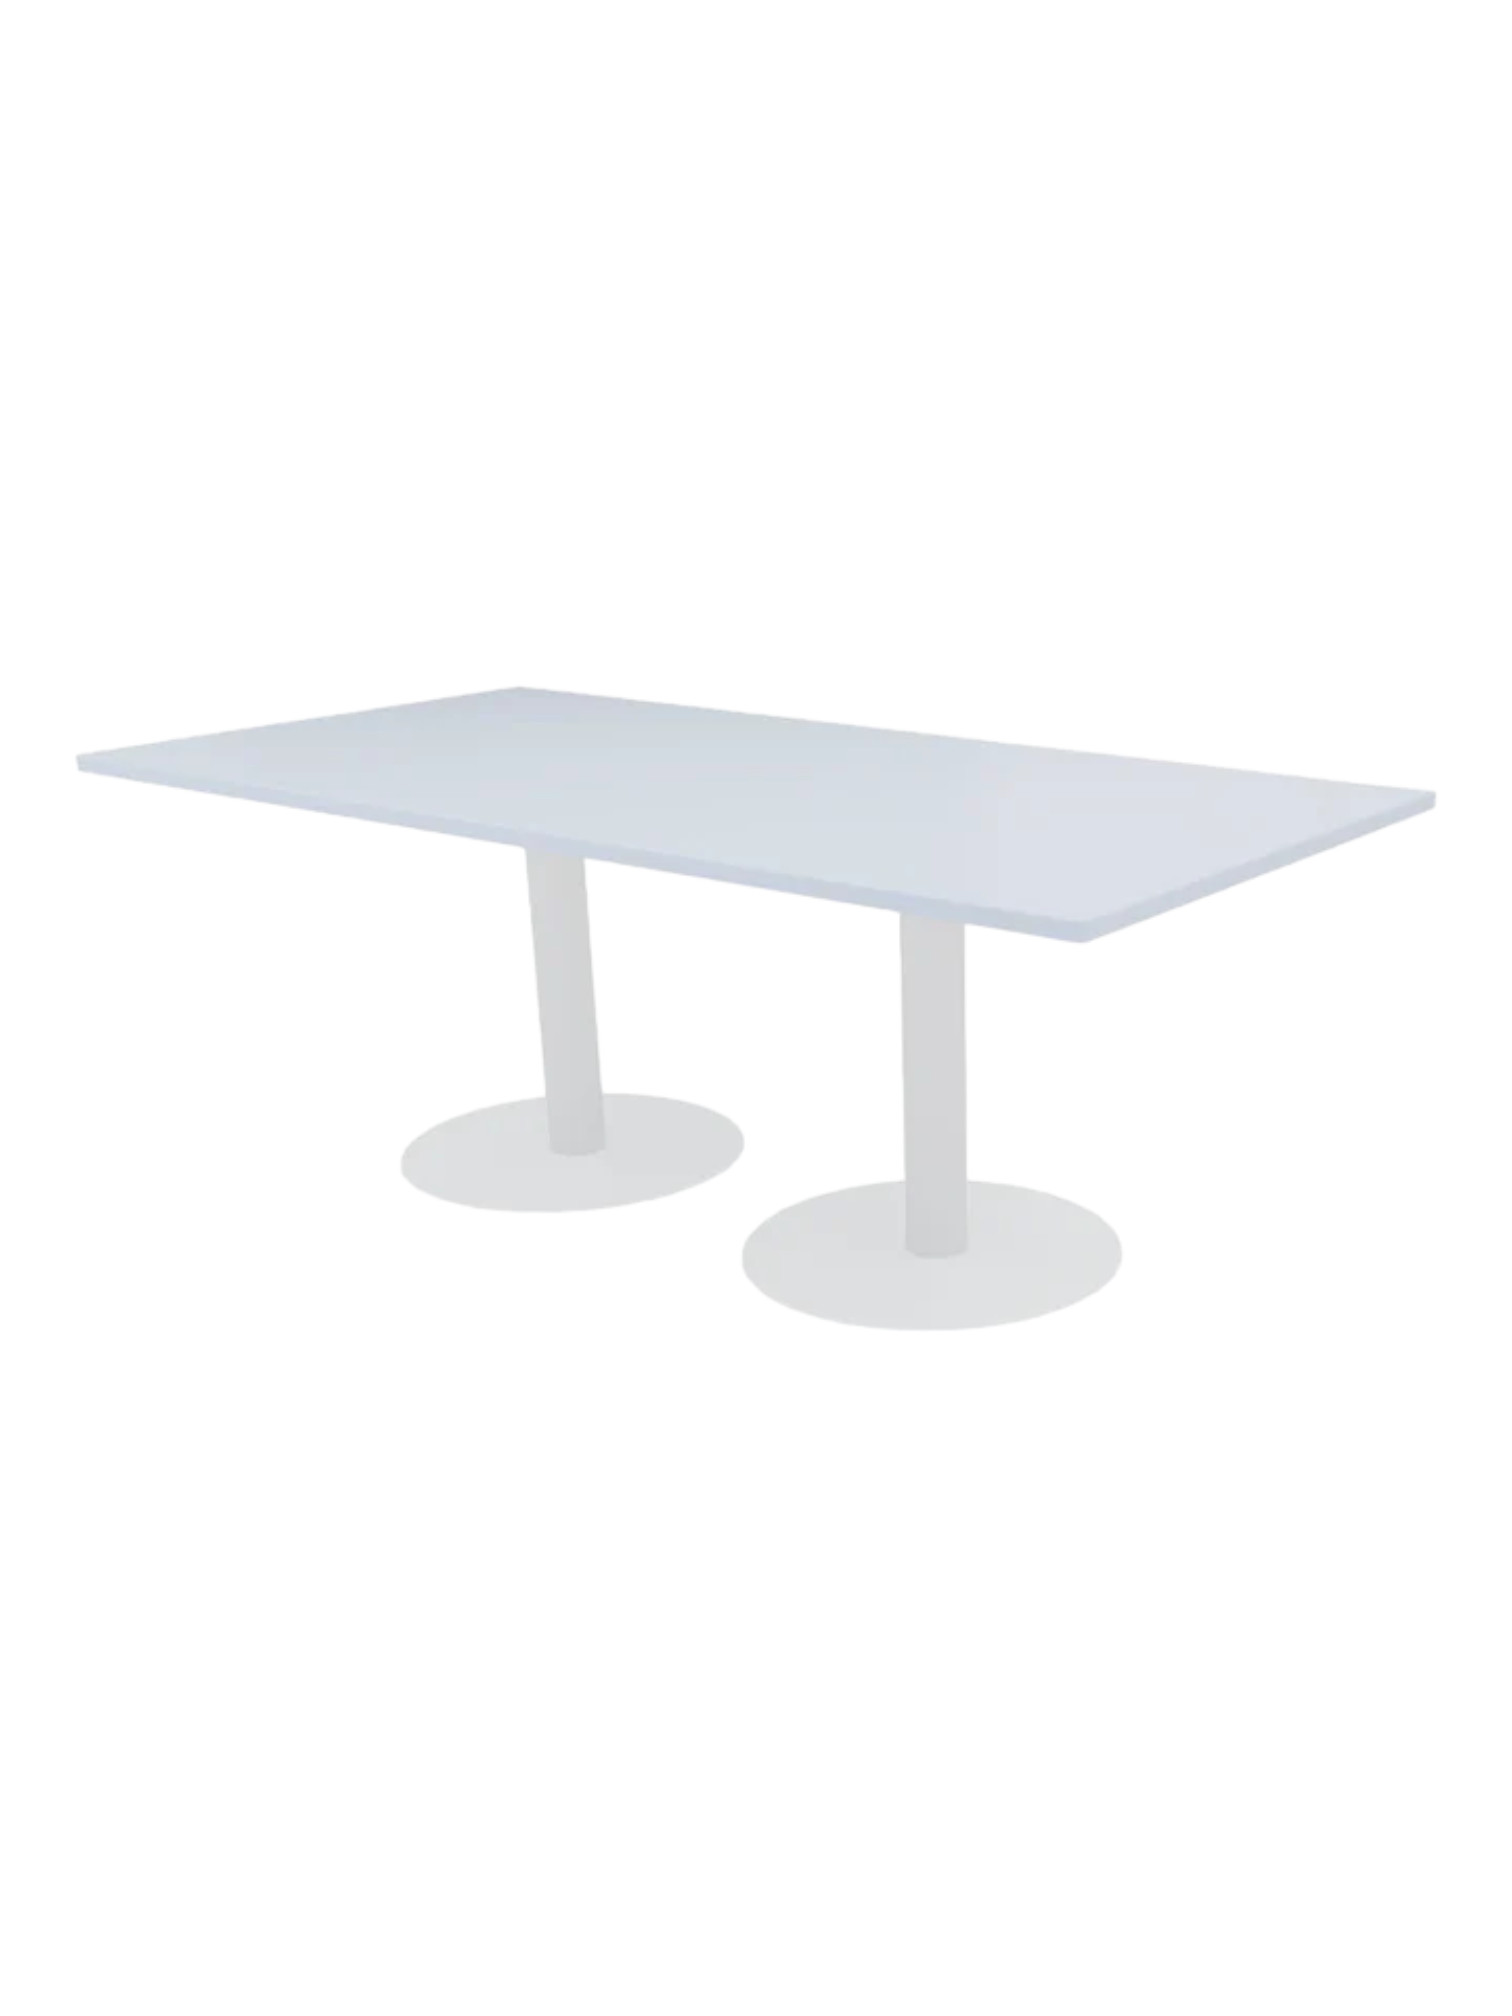 mesa rectangular reuniones de euromof